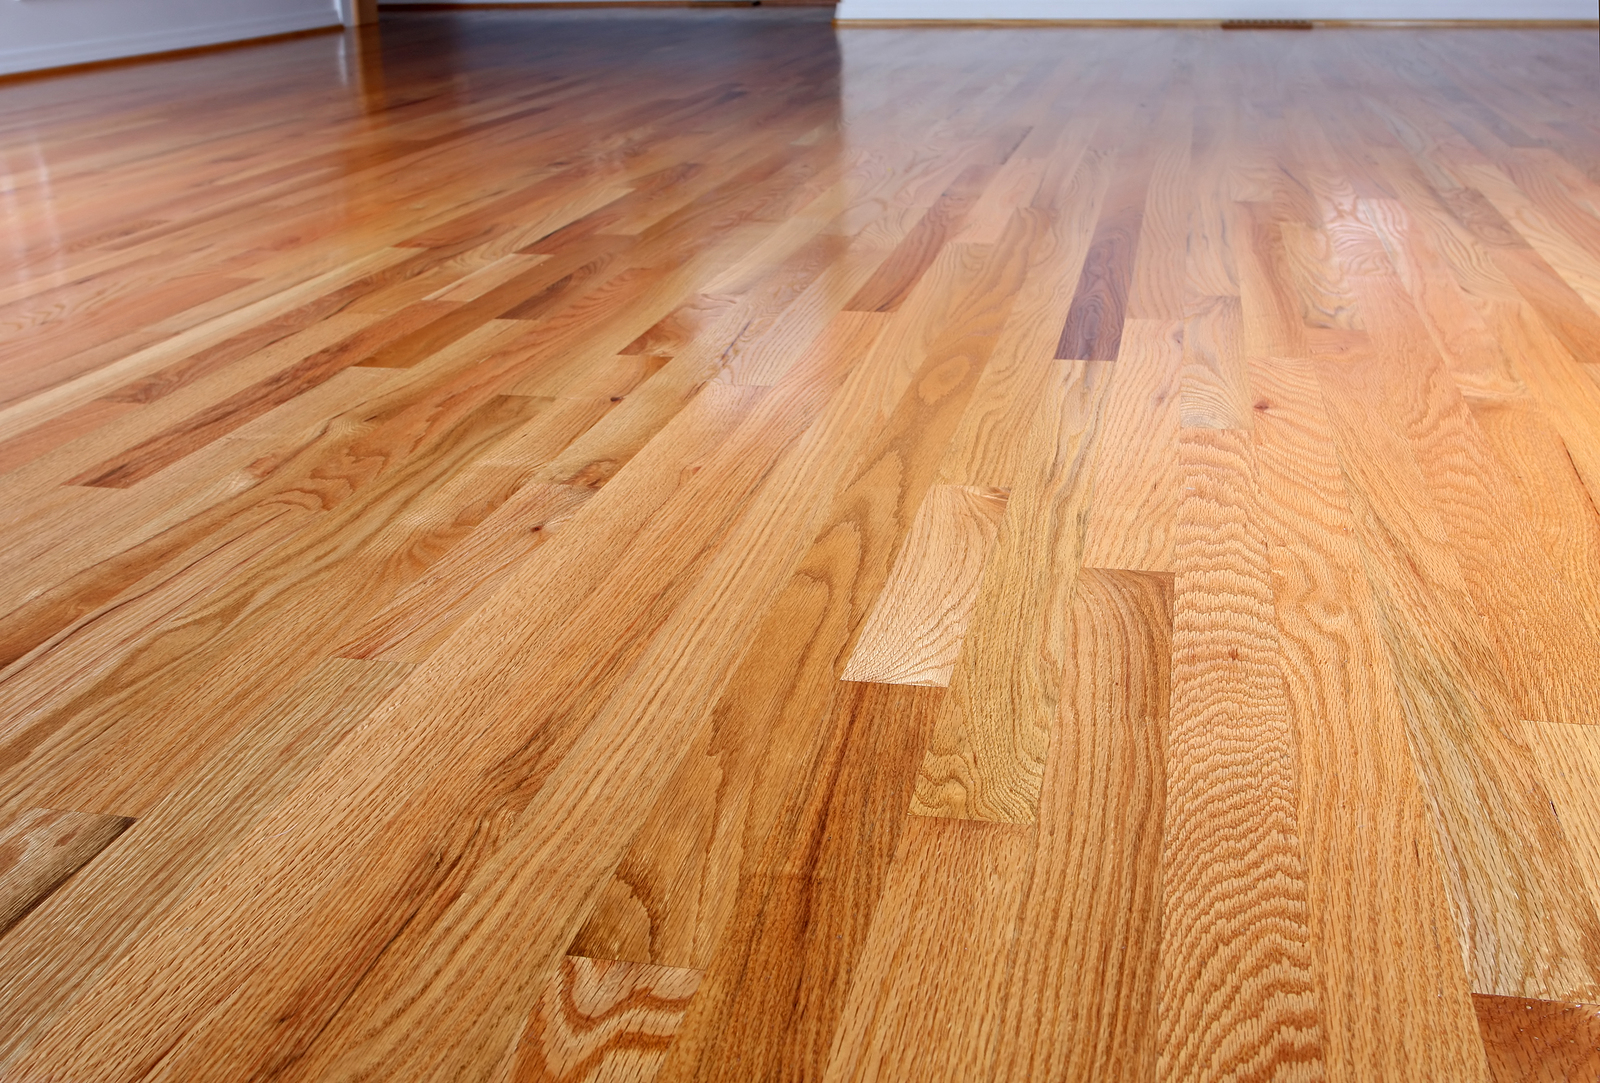 Residential Hardwood Floors Hernandez, Hardwood Floor Waxing Services